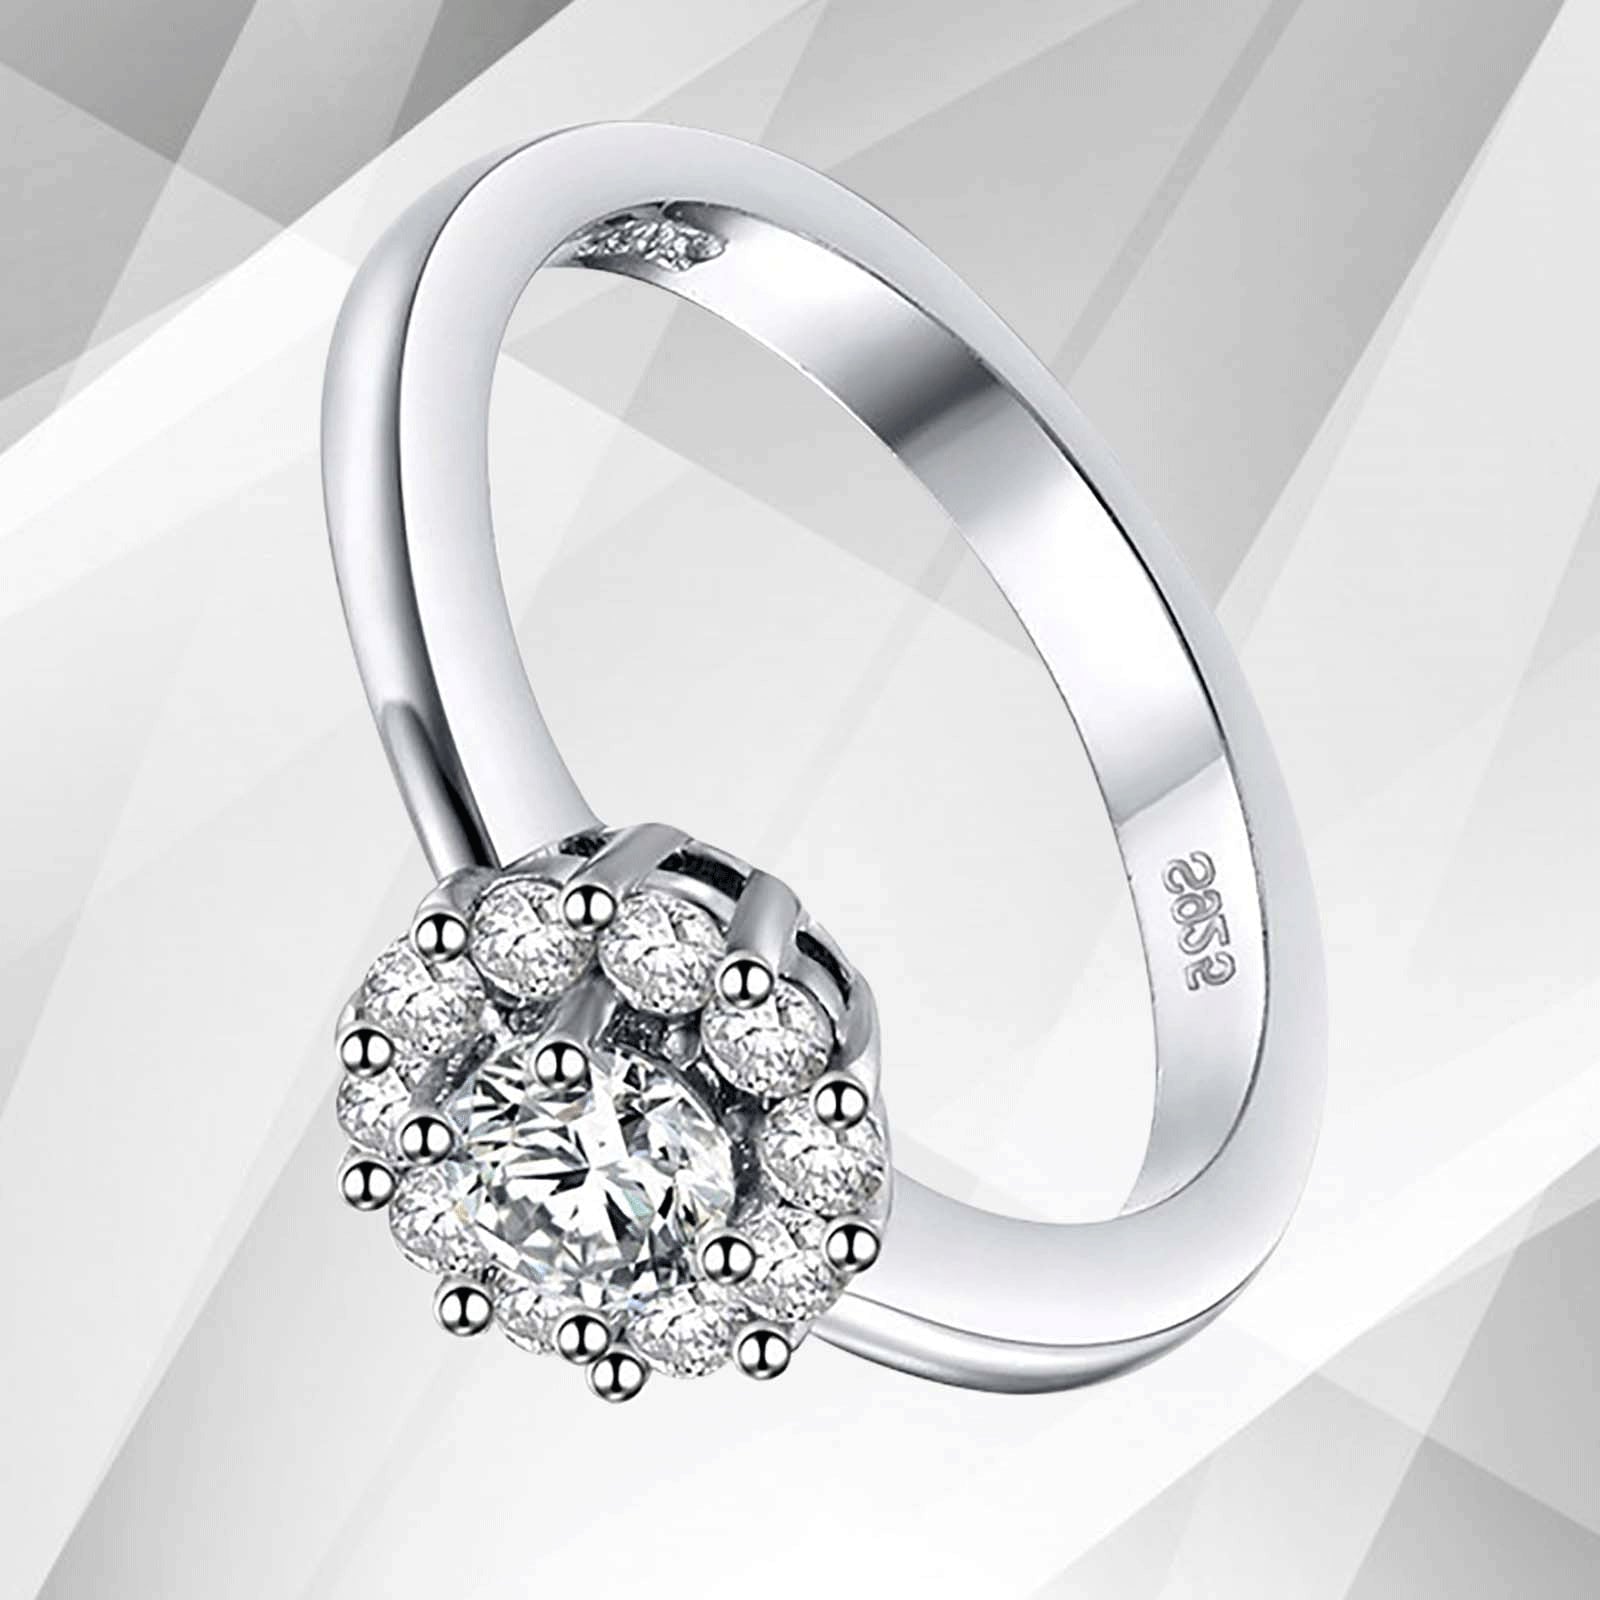 Charismatic Cushion Halo Pave Engagement Ring - 1.70Ct CZ Diamond, 18Ct White Gold, Free Shipping Bijou Her